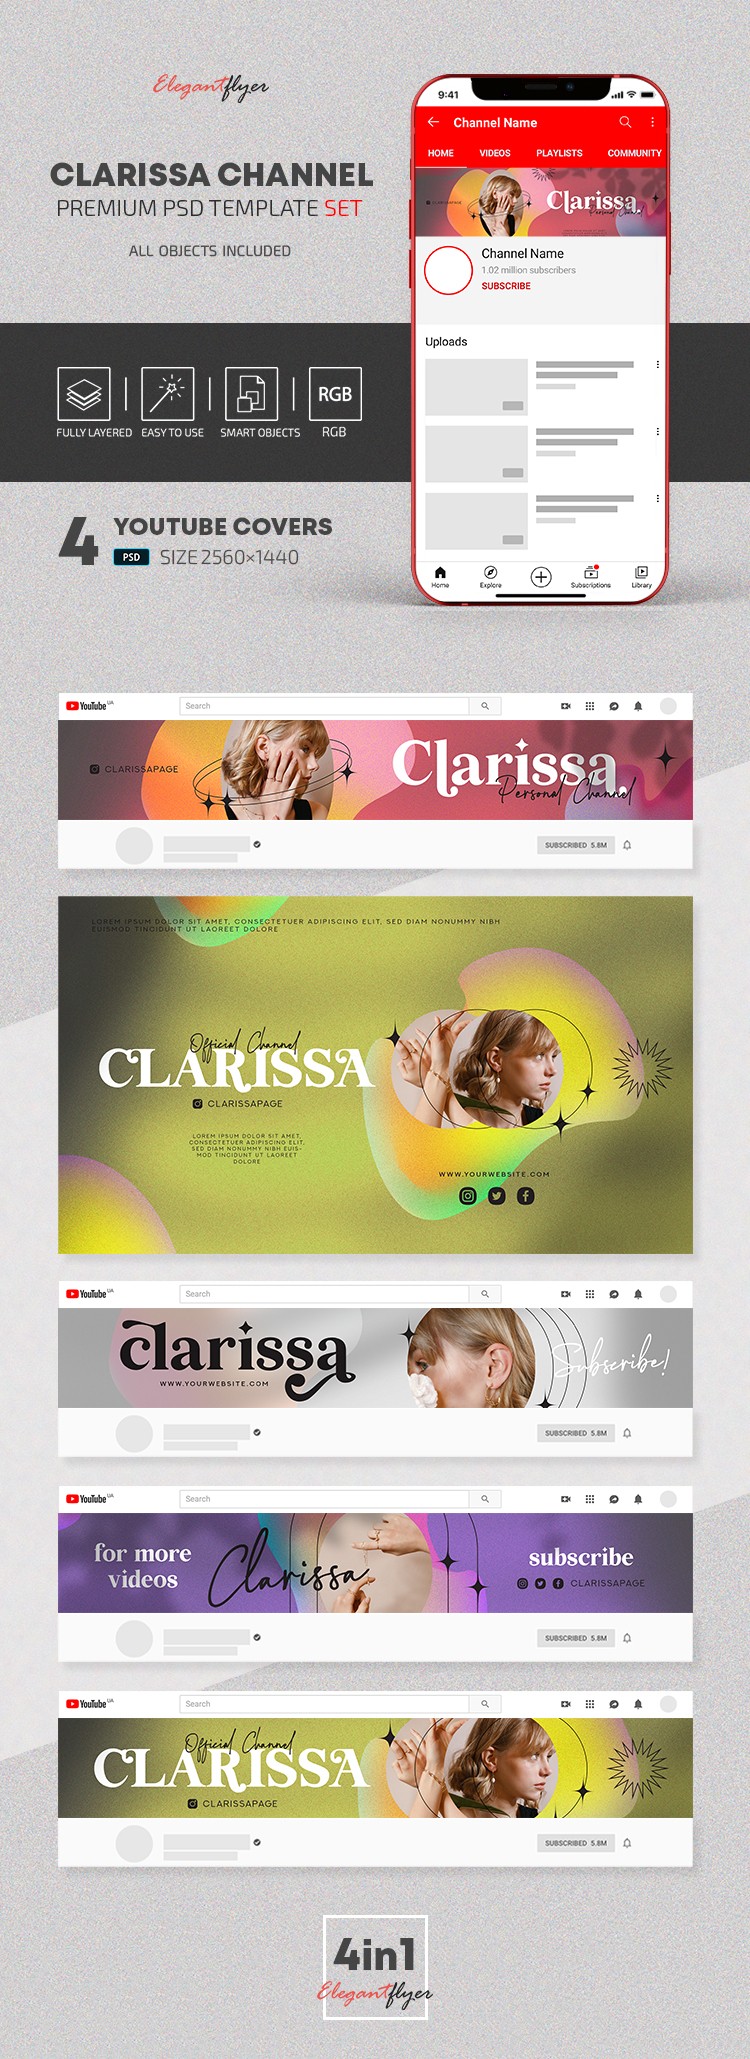 Clarissa Channel Youtube by ElegantFlyer